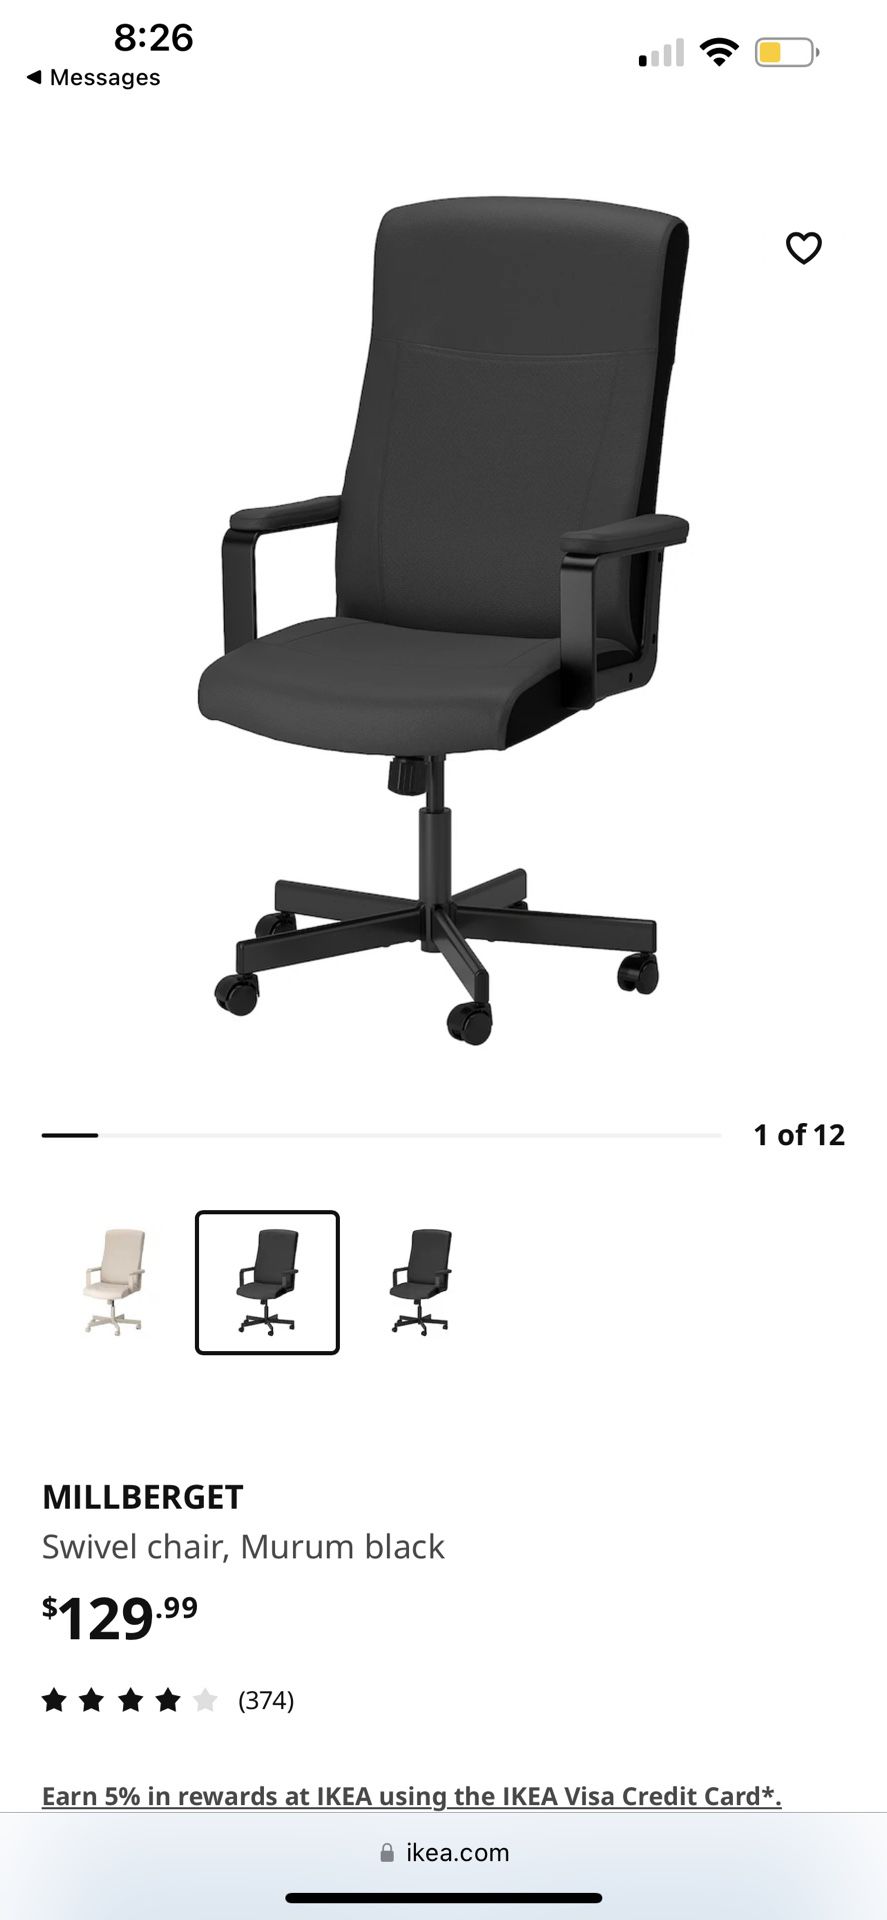 MILLBERGET Swivel chair, Murum black - IKEA